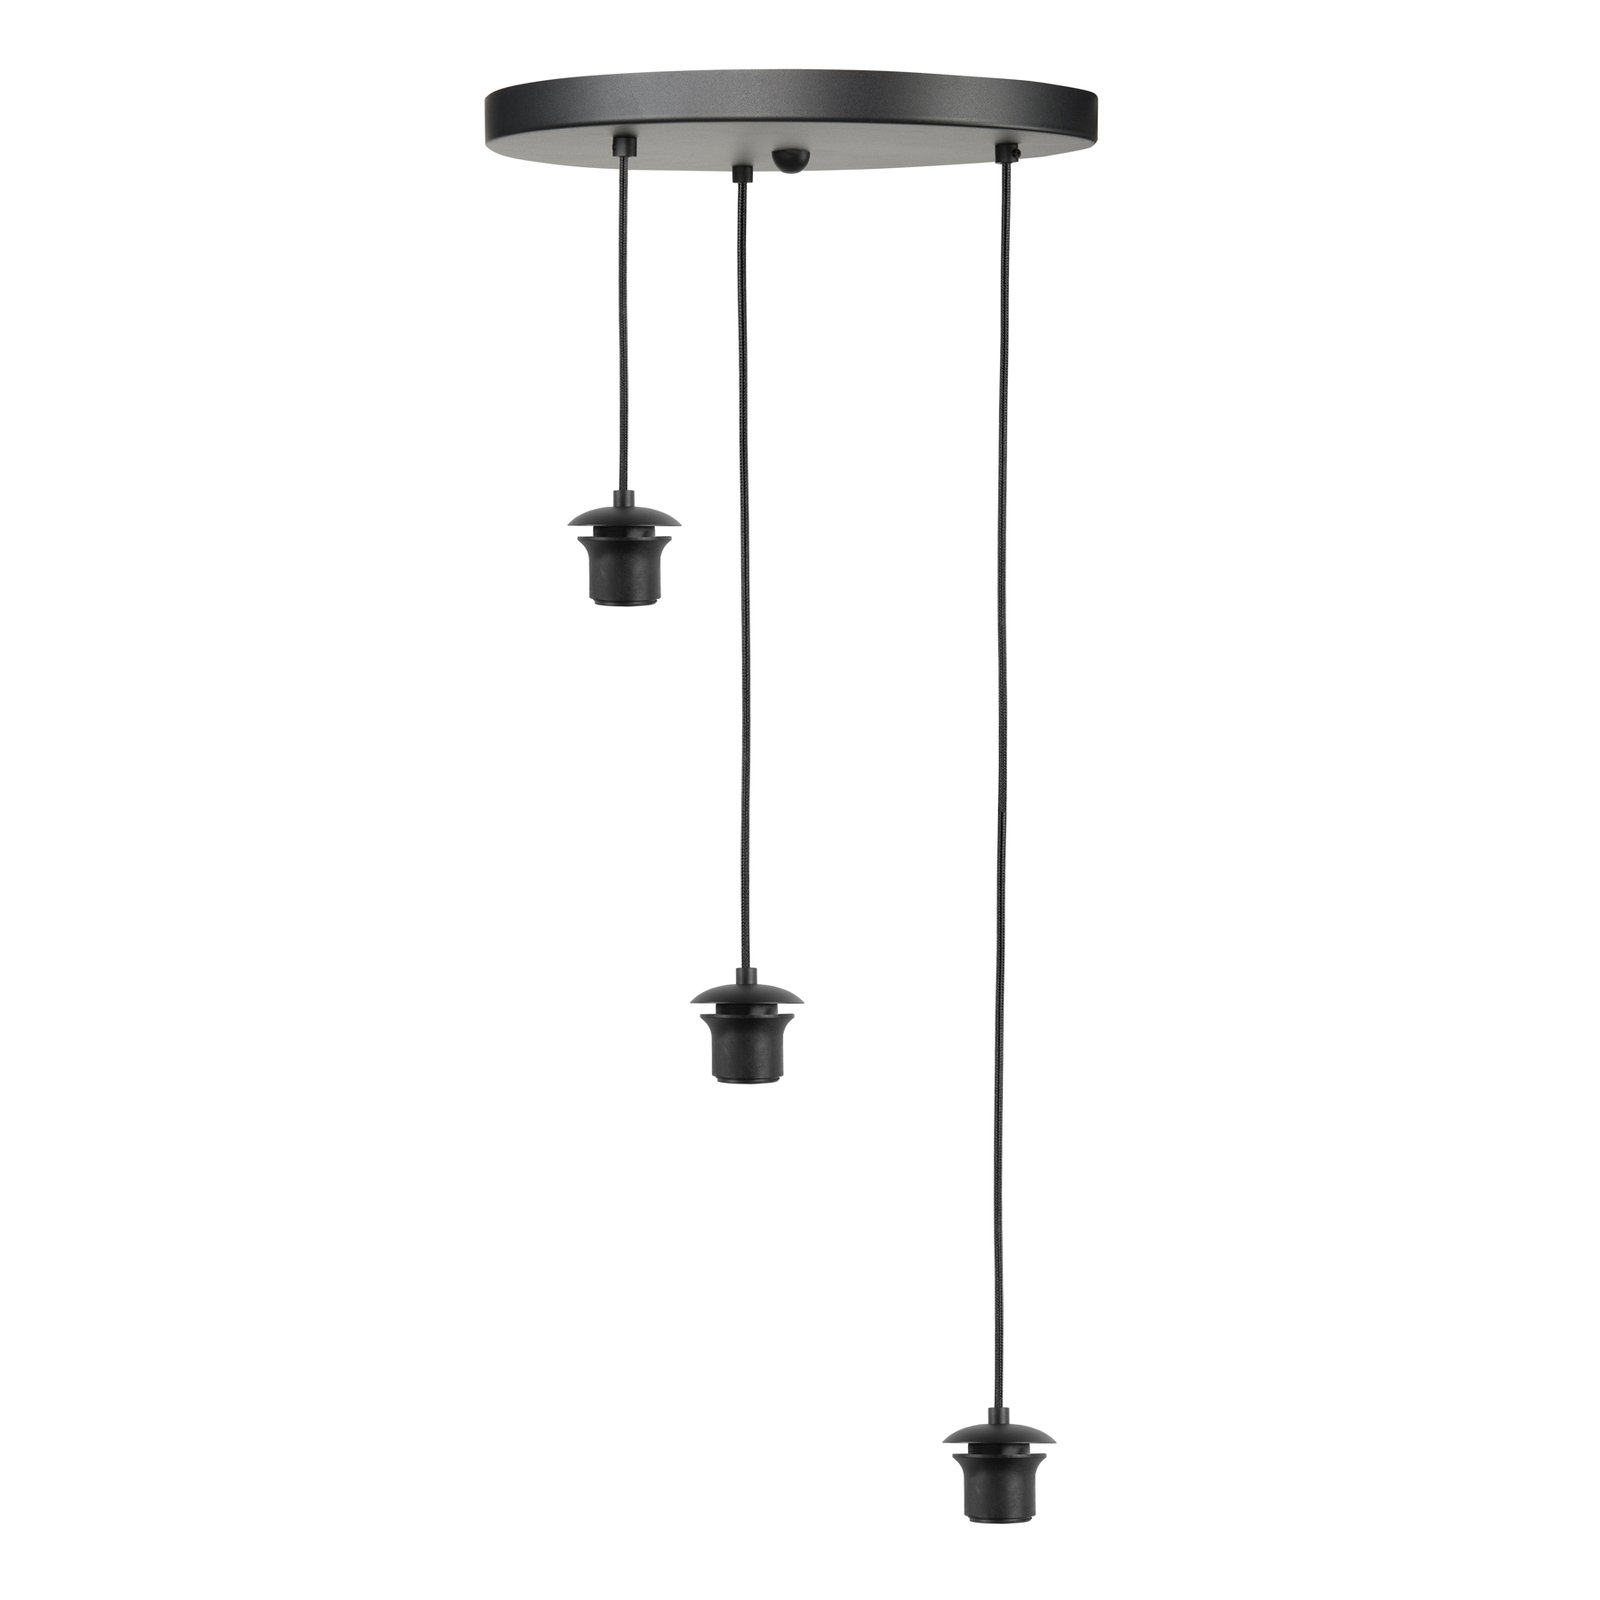 Hanglamp Fantasy, 3-lamps, zwart